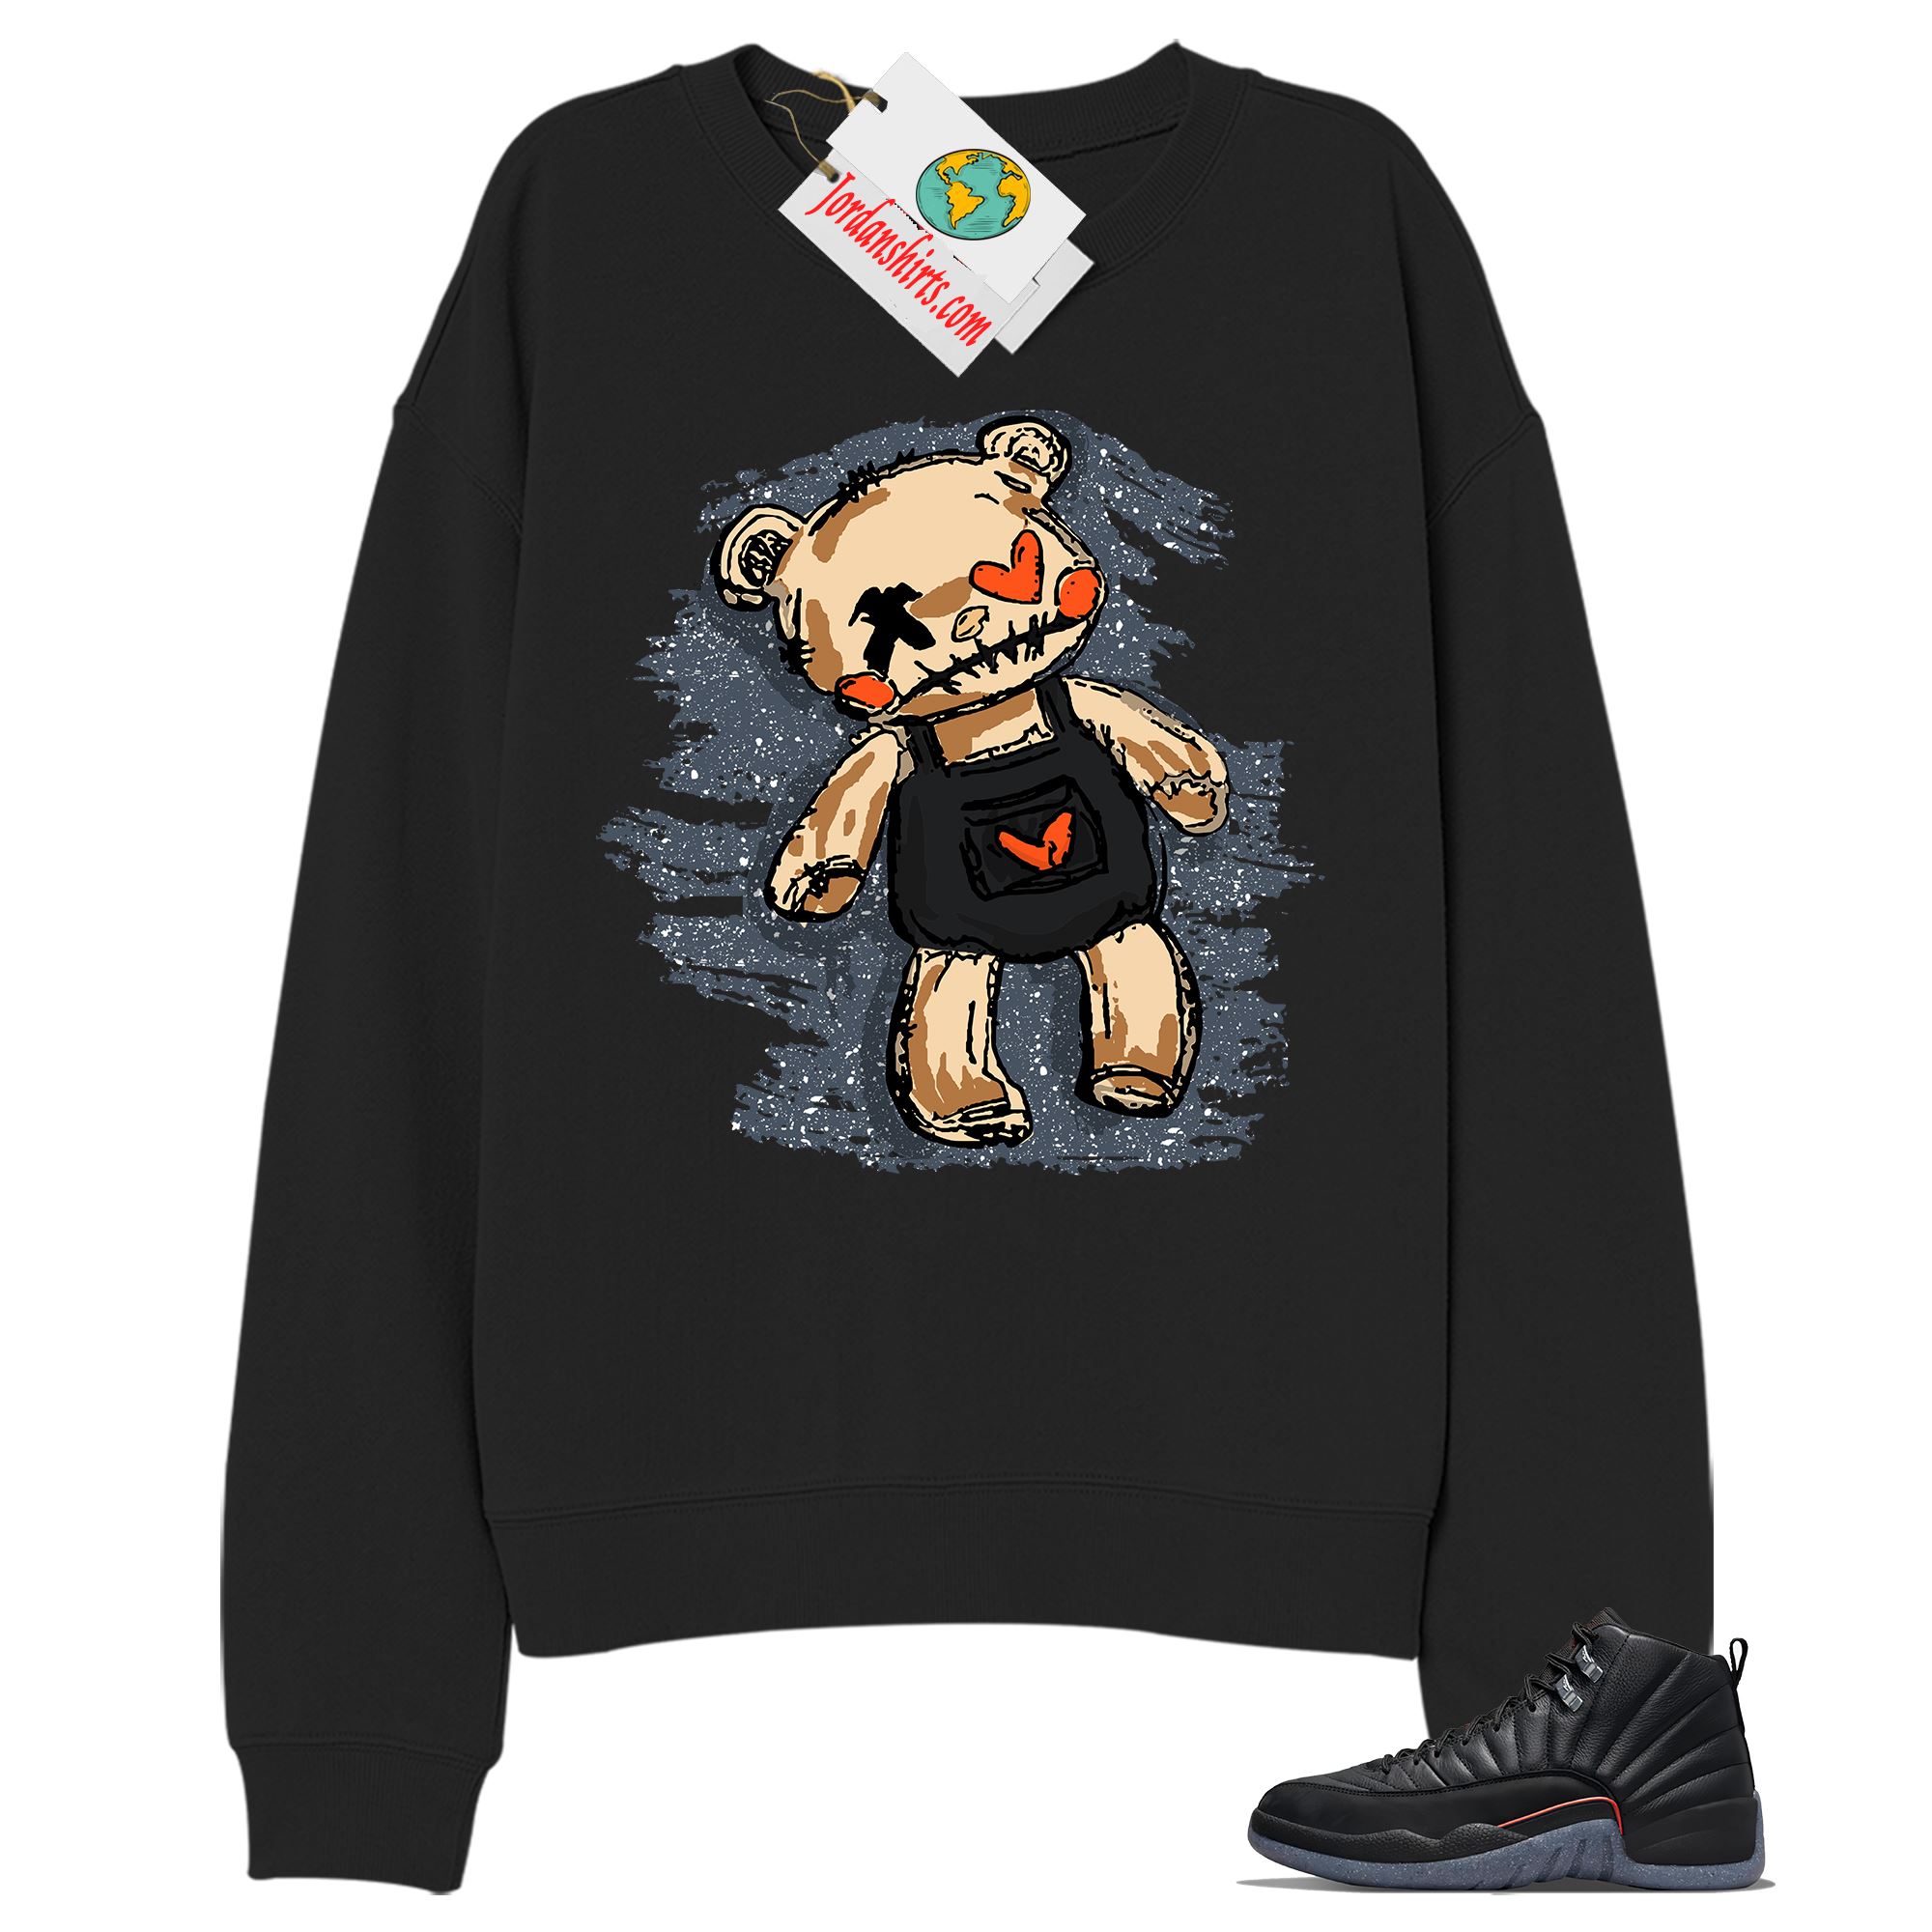 Jordan 12 Sweatshirt, Teddy Bear Broken Heart Black Sweatshirt Air Jordan 12 Utility Grind 12s Full Size Up To 5xl